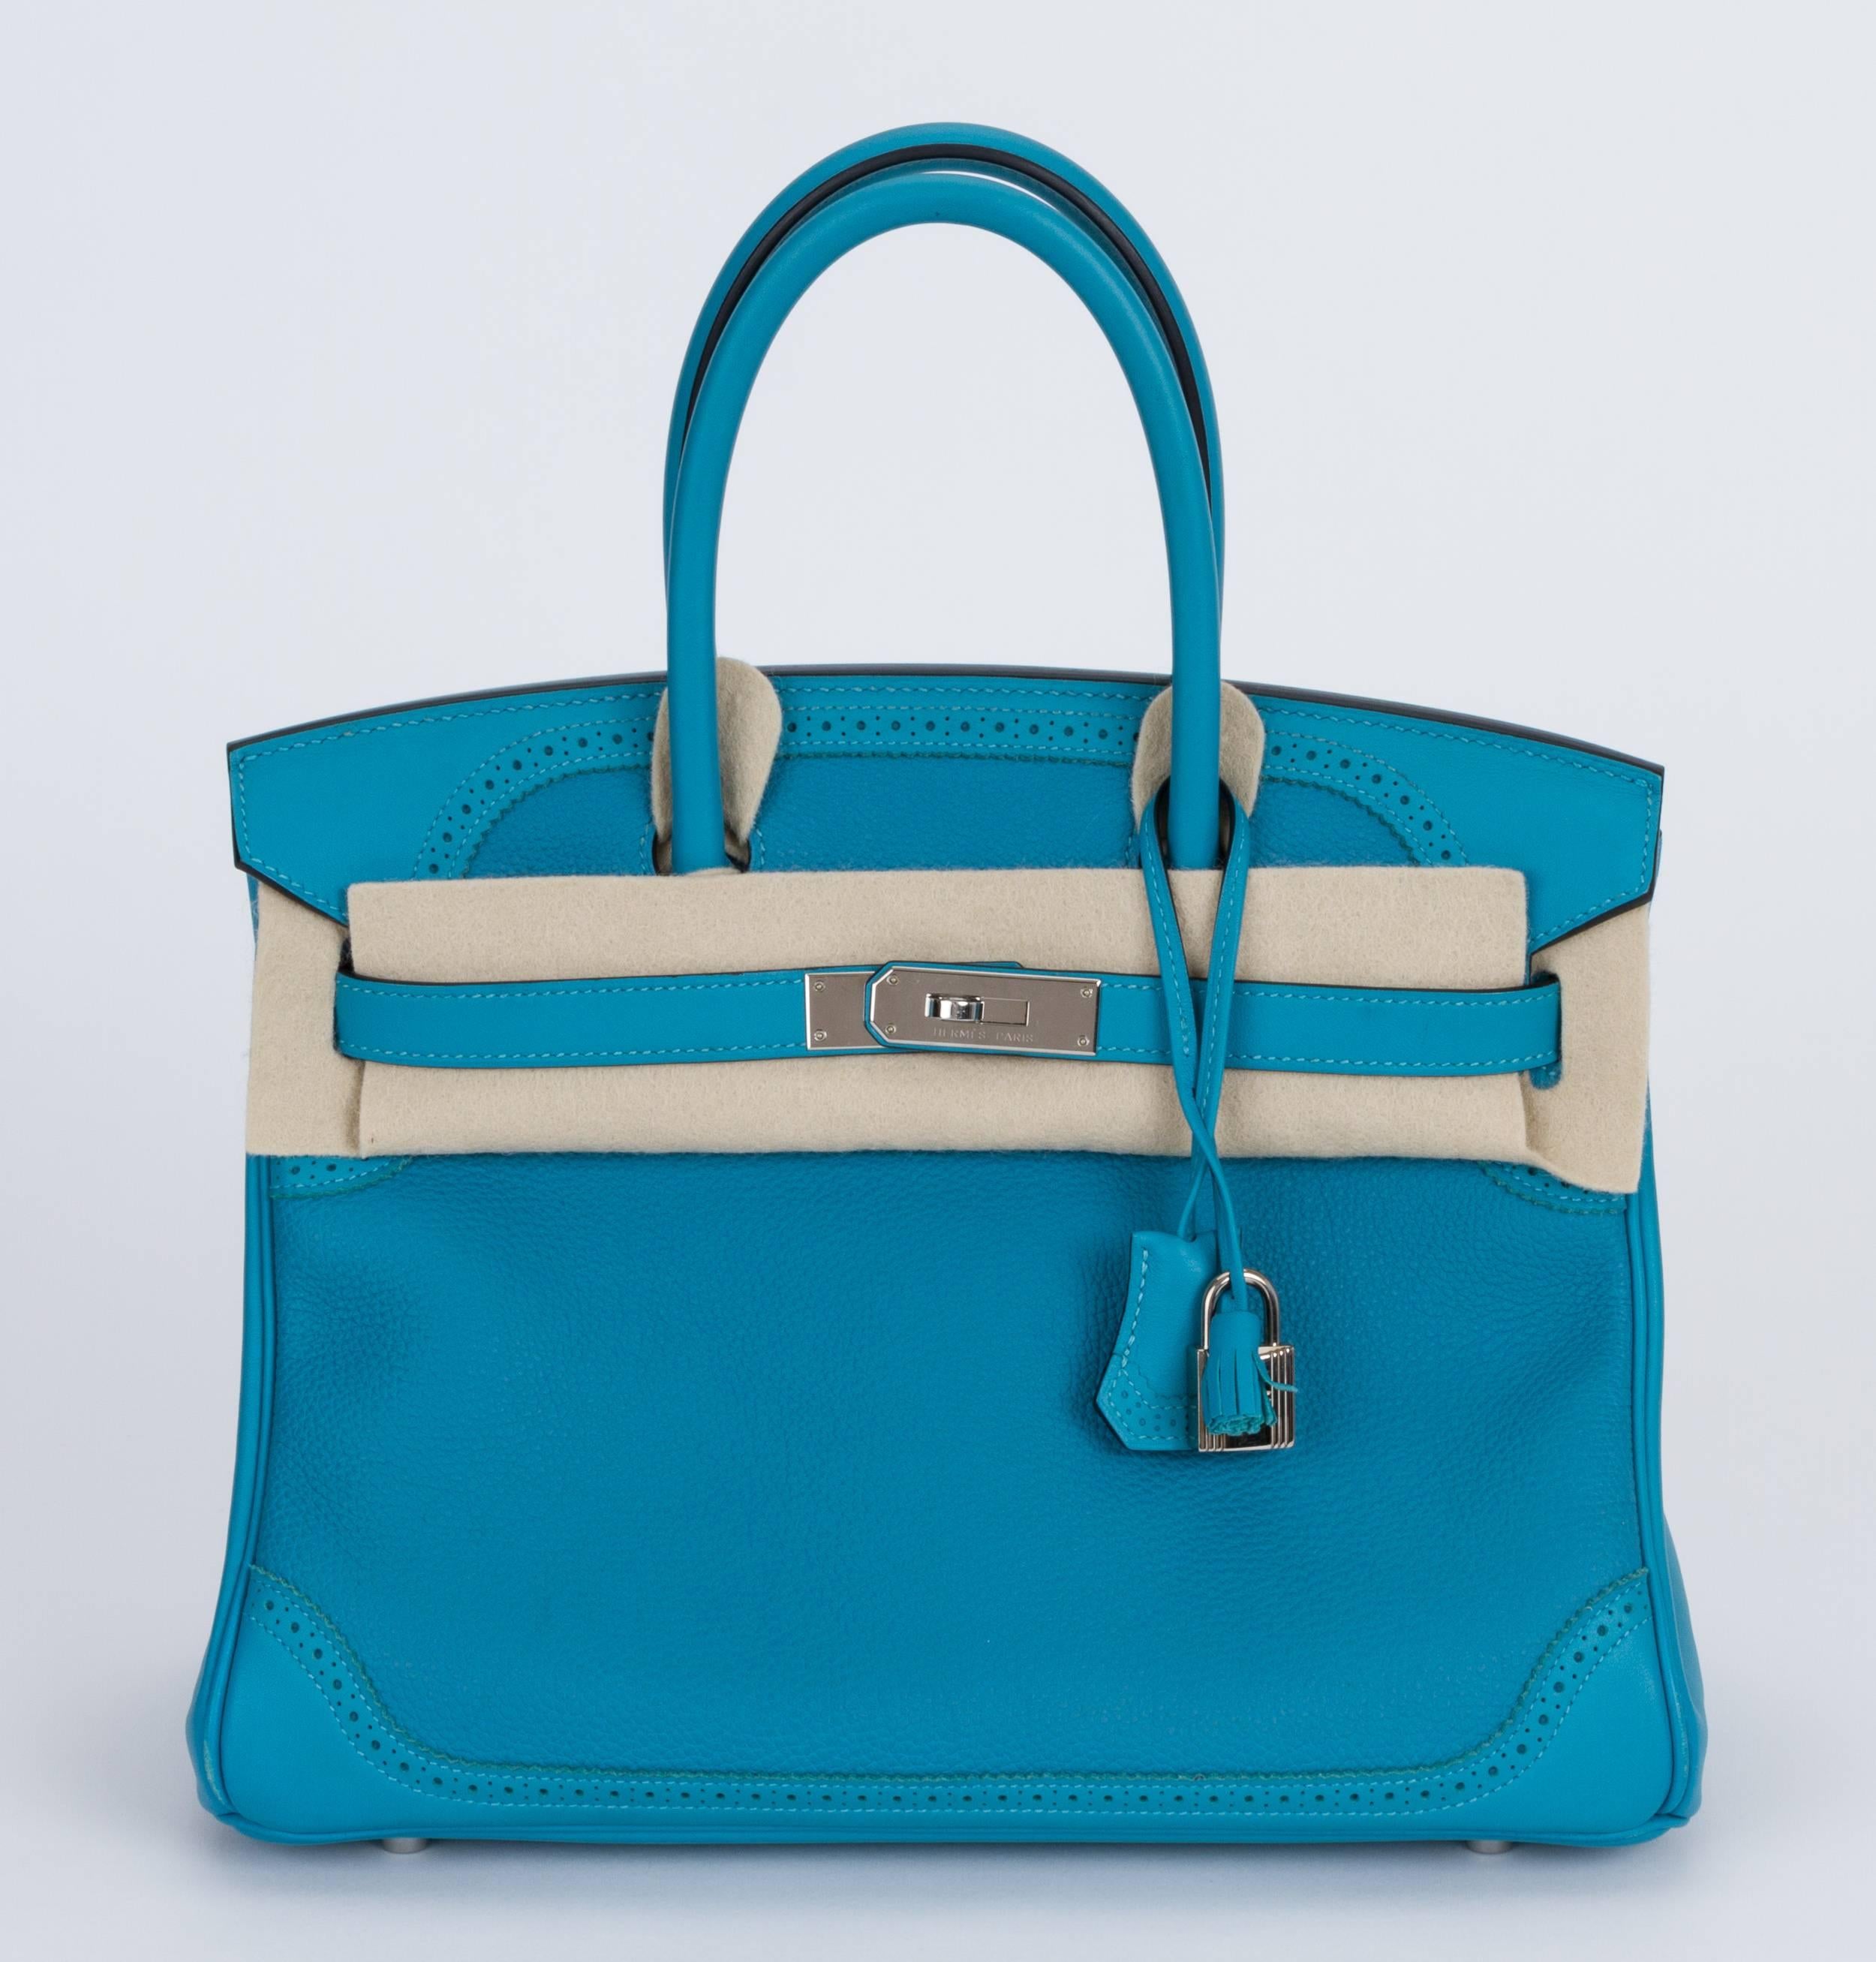 Hermes 30 Ghillies Turquoise Birkin Bag 